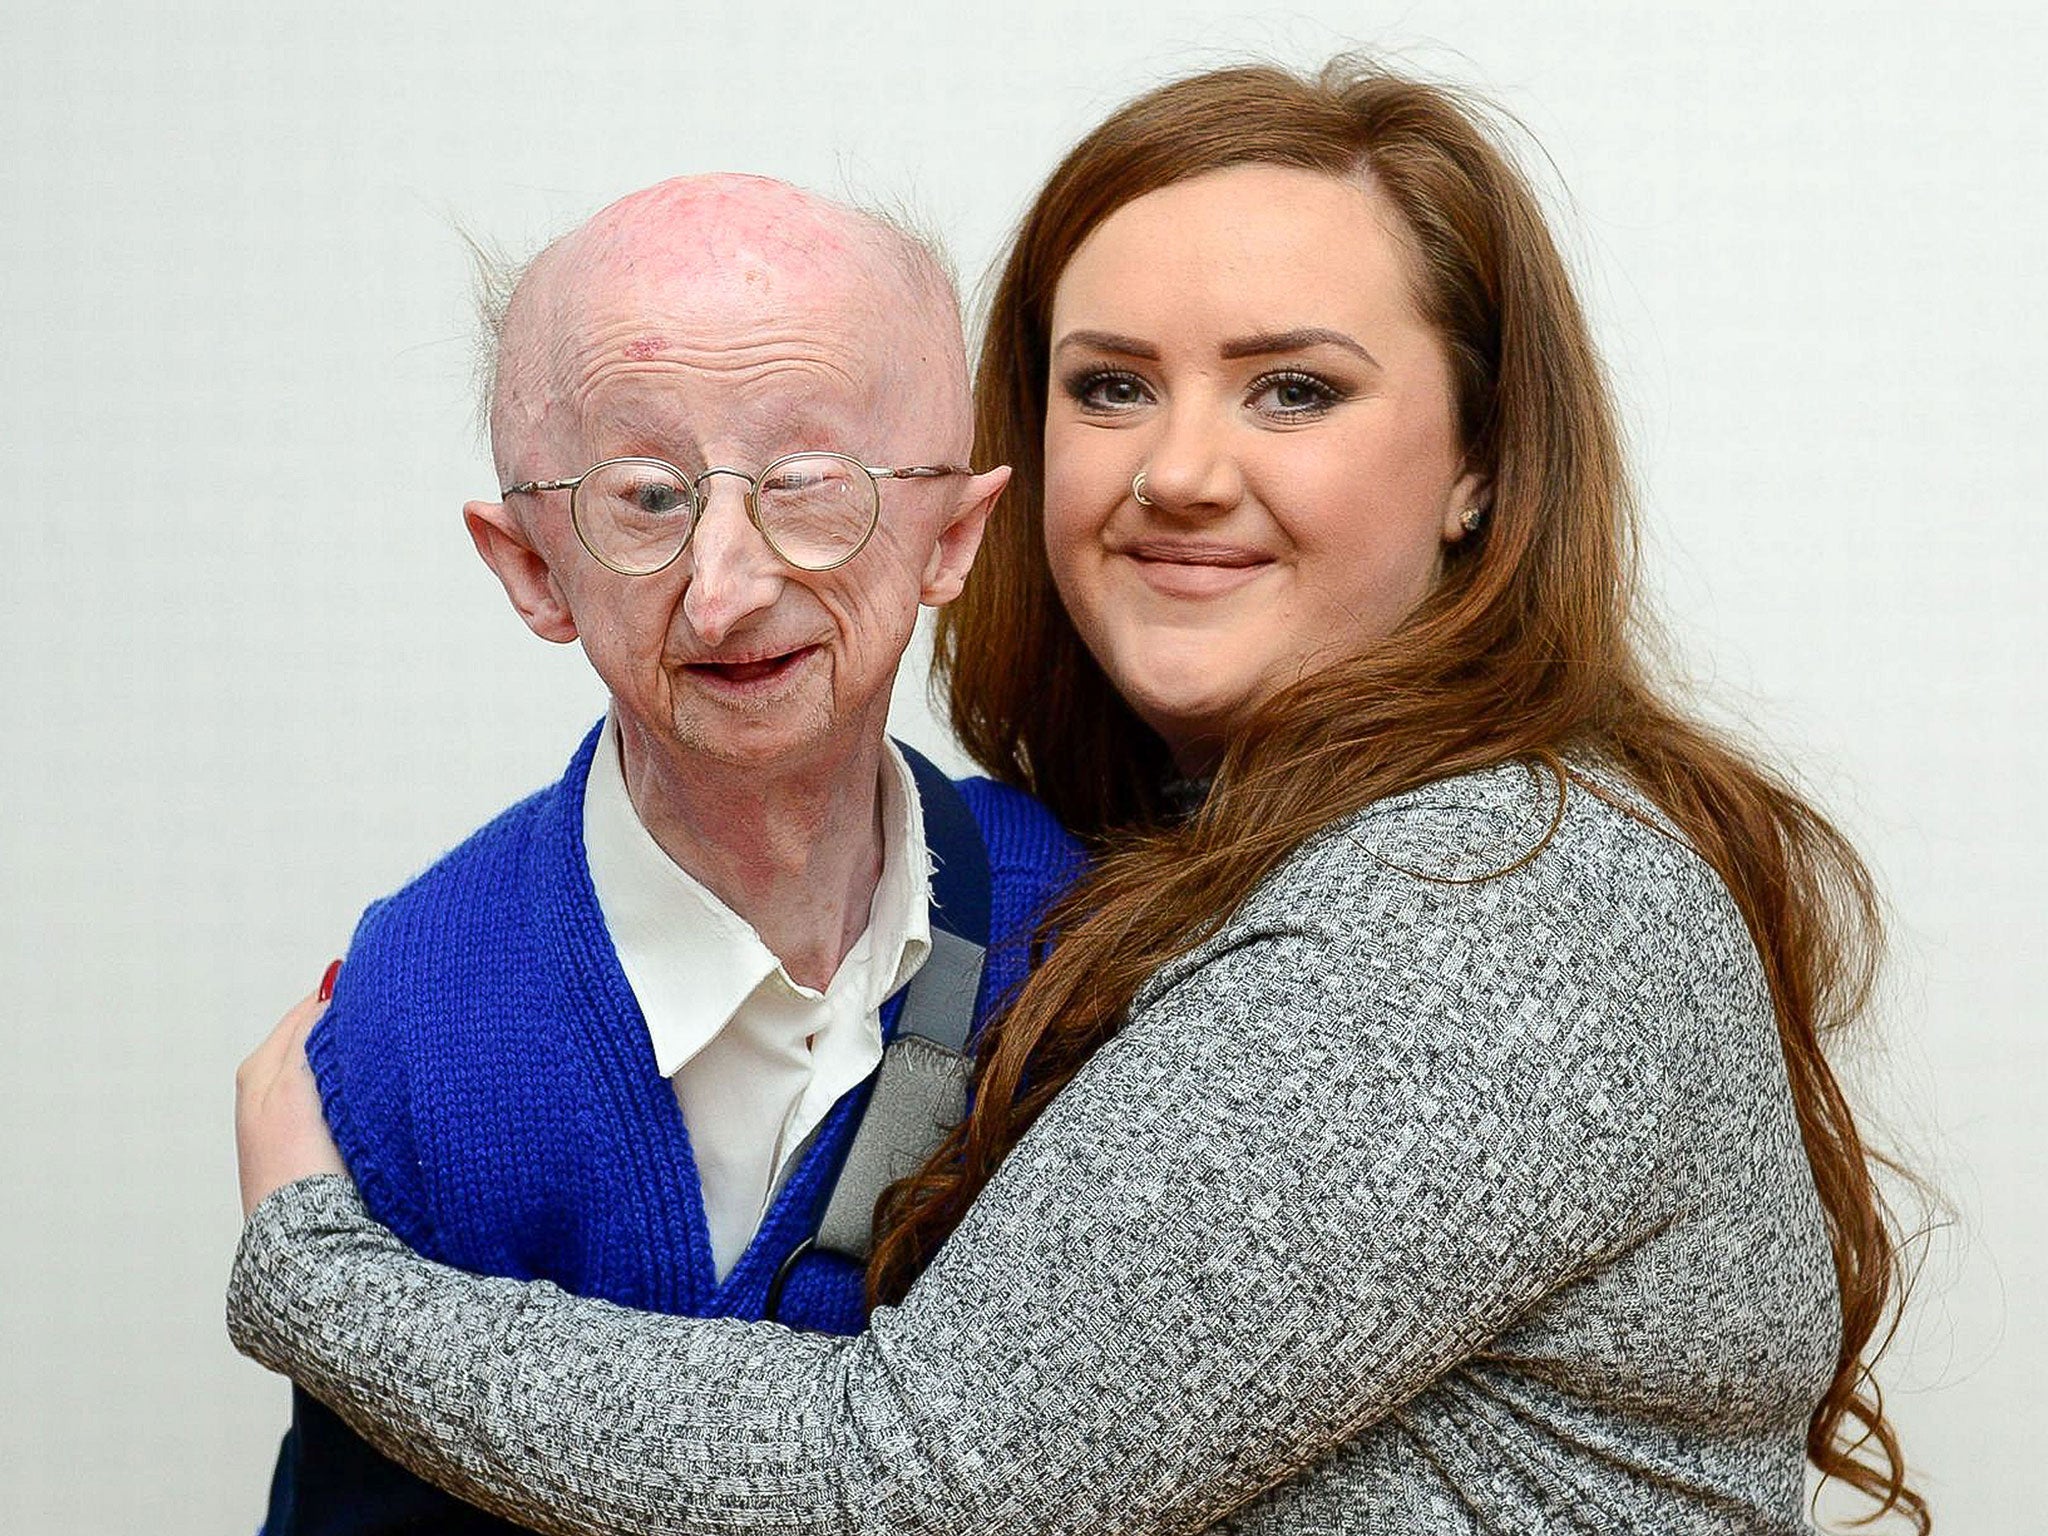 Fundraiser meets mugged disabled man she helped raise money for, Gateshead, Britain - 01 Feb 2015